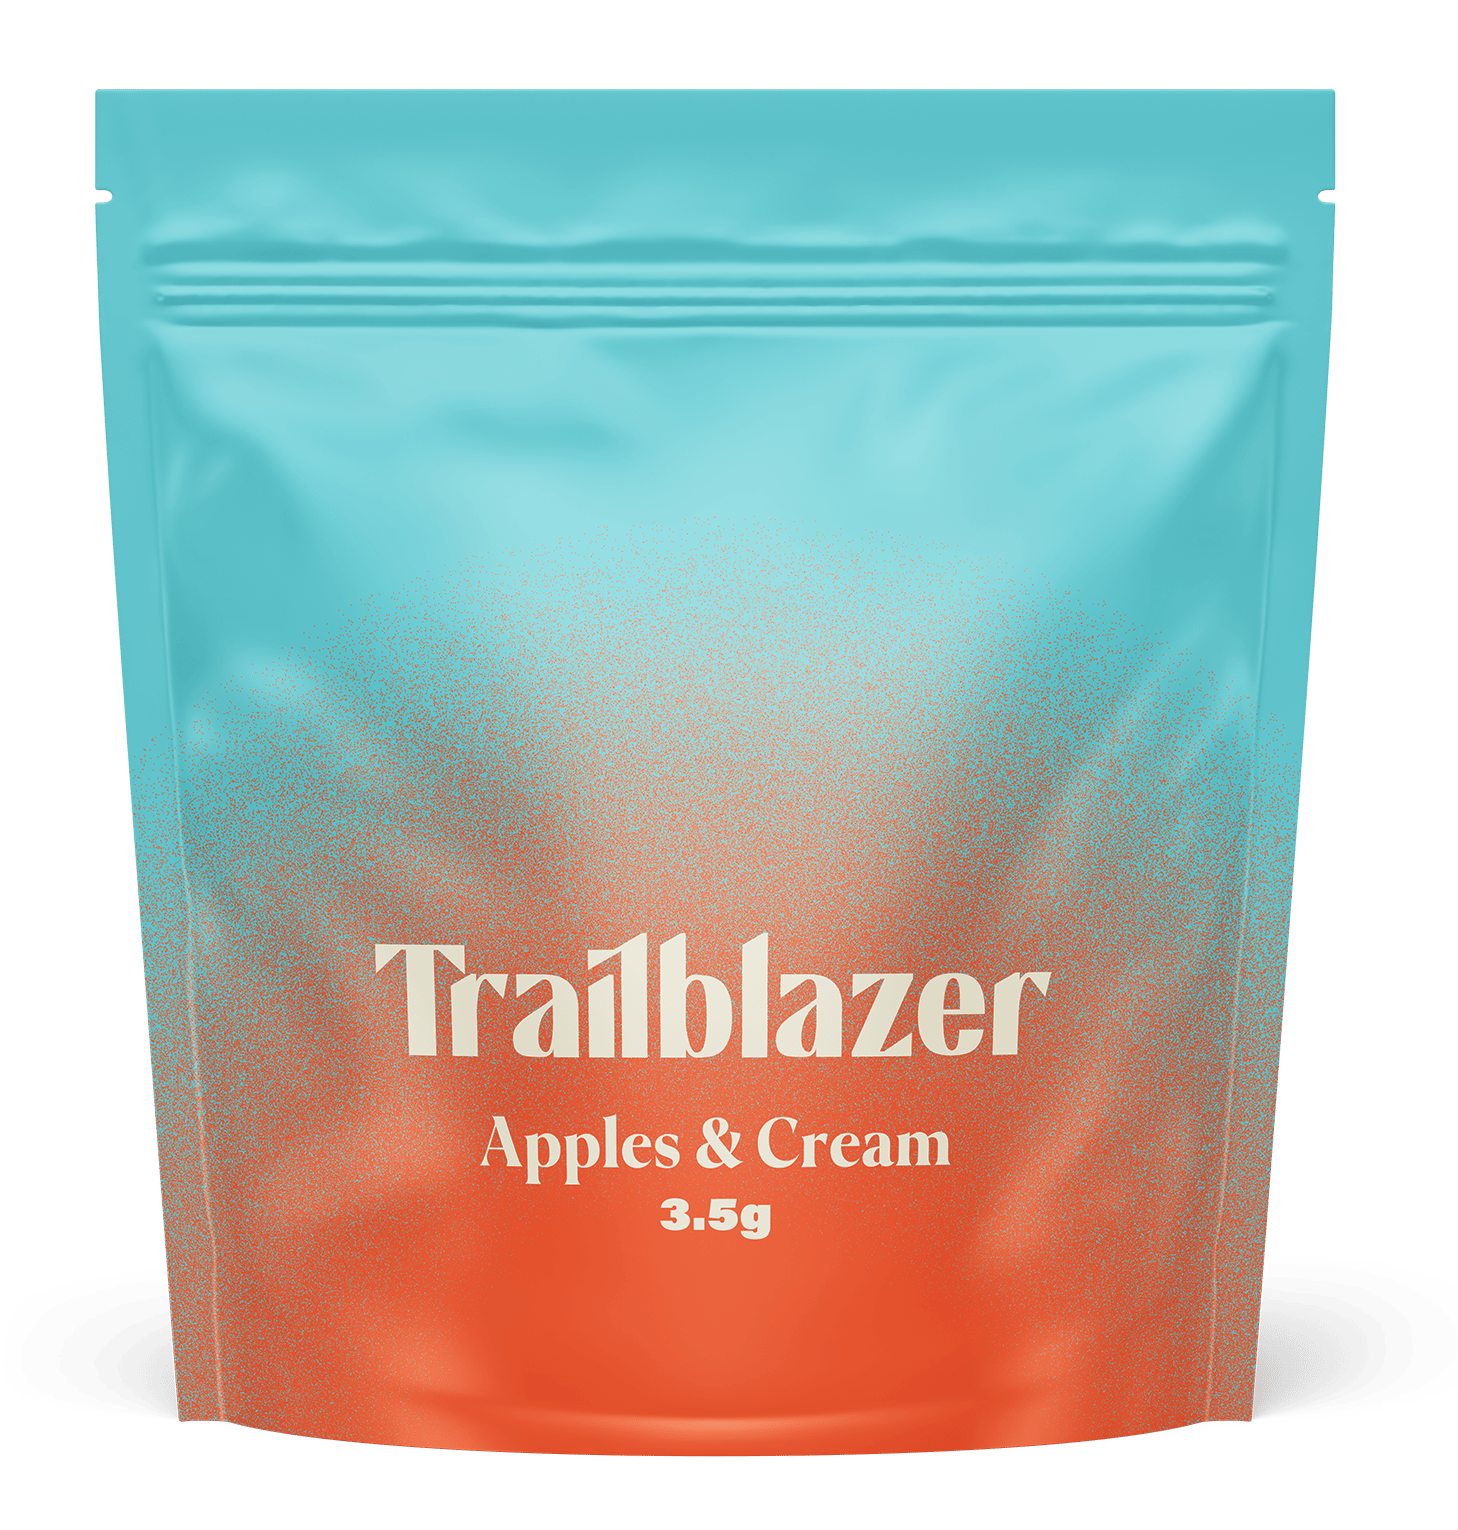 A Trailblazer Apples &#x26; Cream pouch.